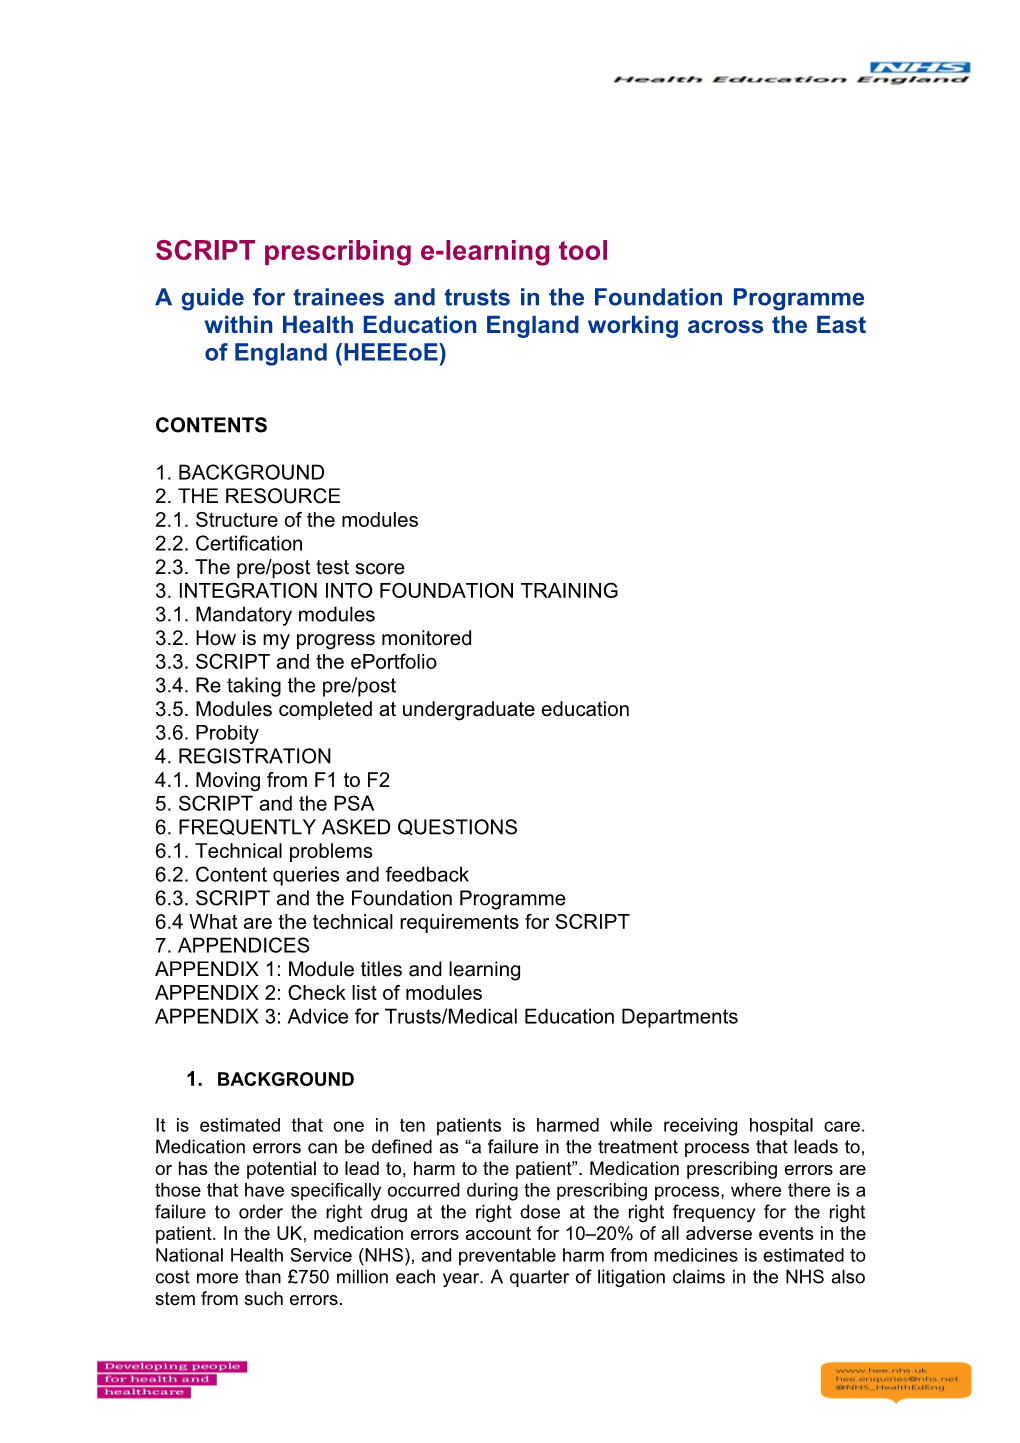 SCRIPT Prescribing E-Learning Tool